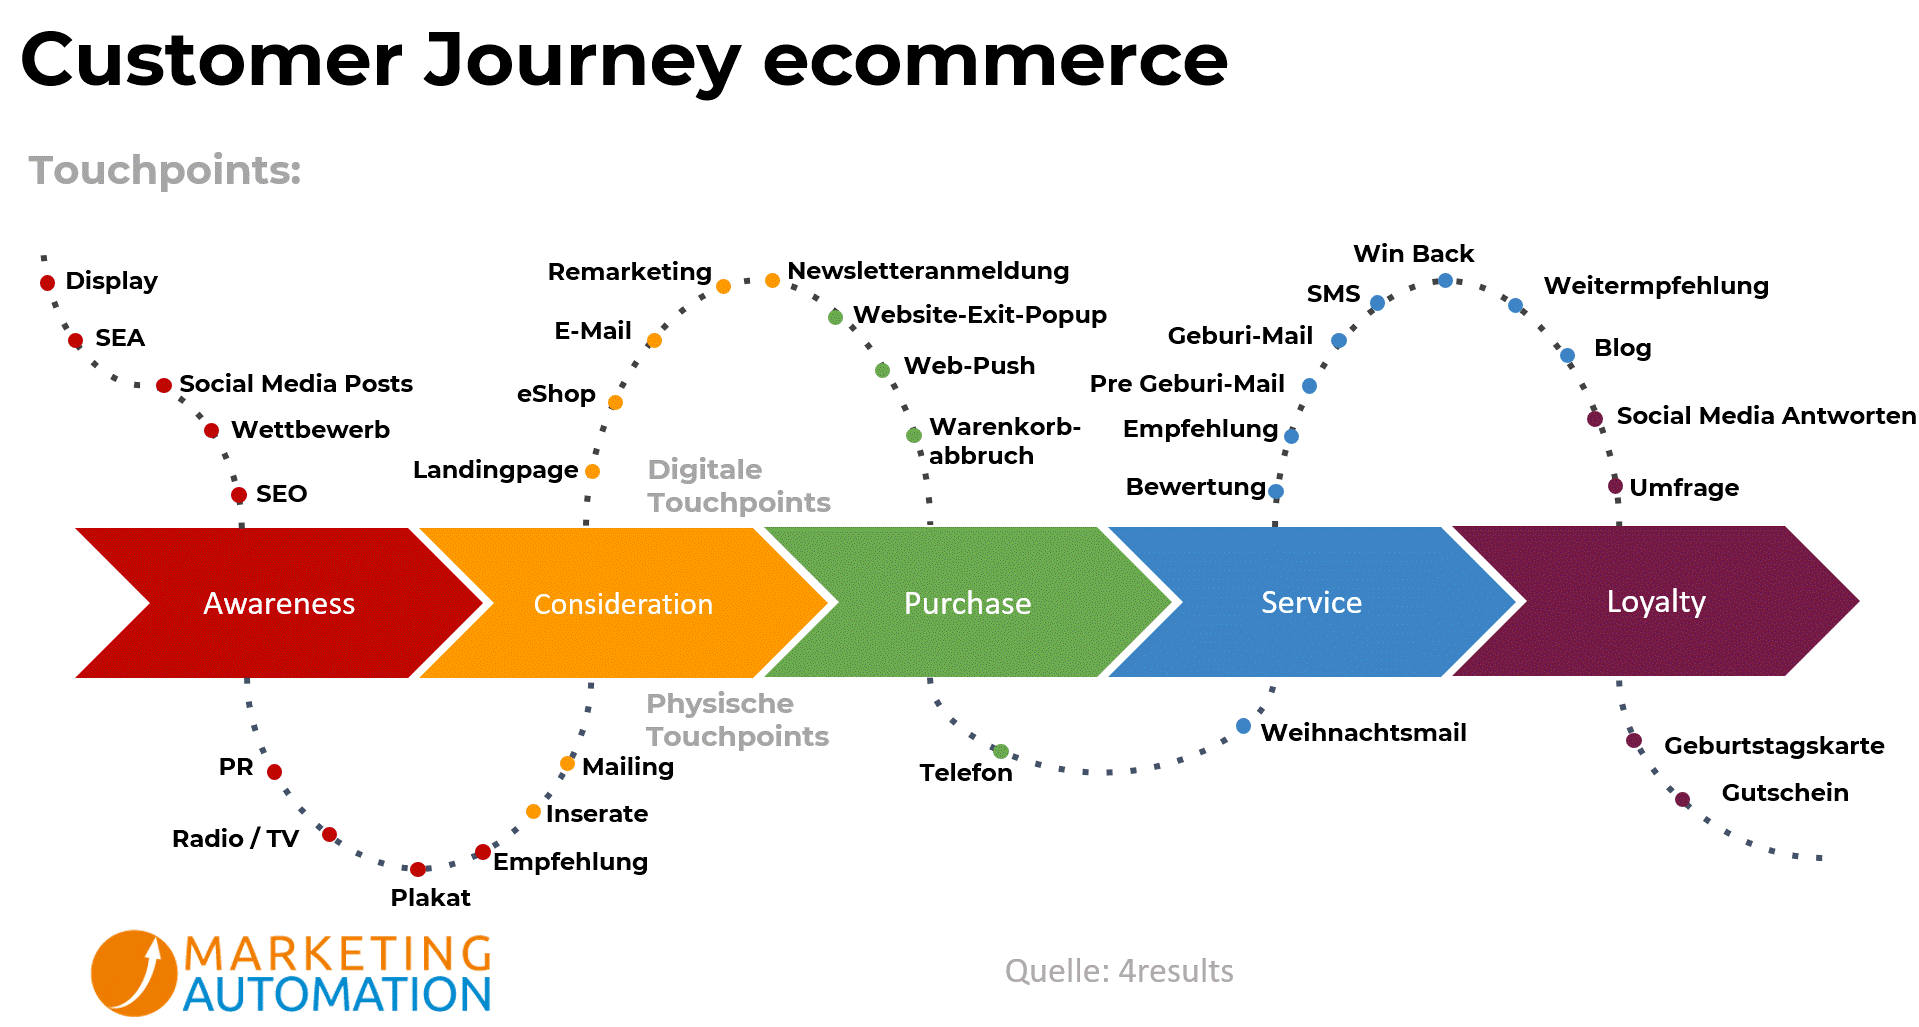 Marketing Automation für eCommerce Customer Journey